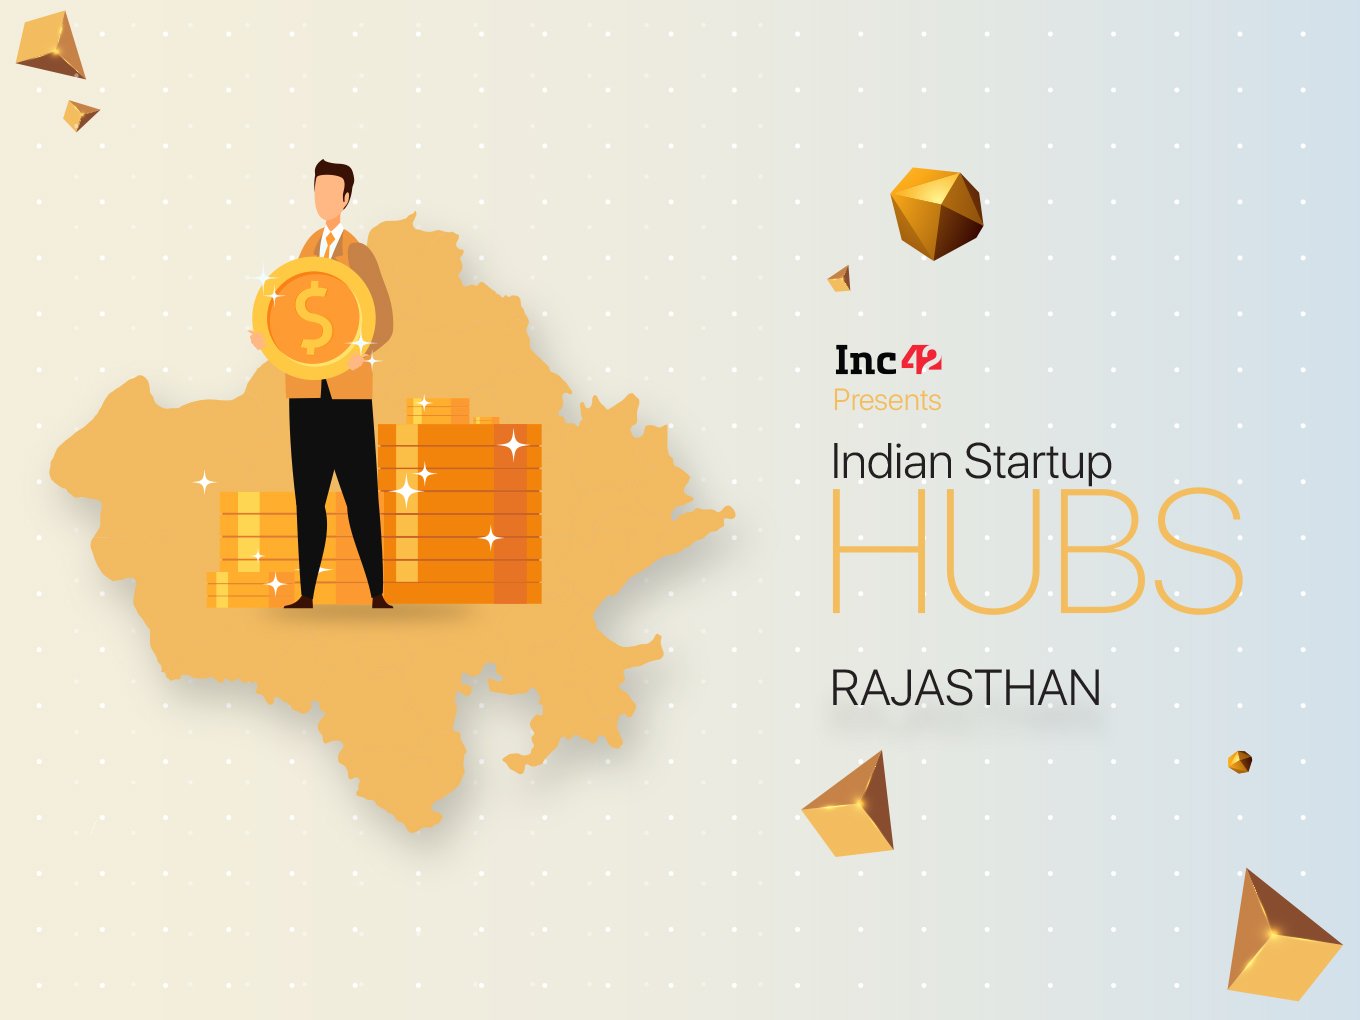 Rajasthan Startup Hub: The Investors, Incubators Enabling Innovation